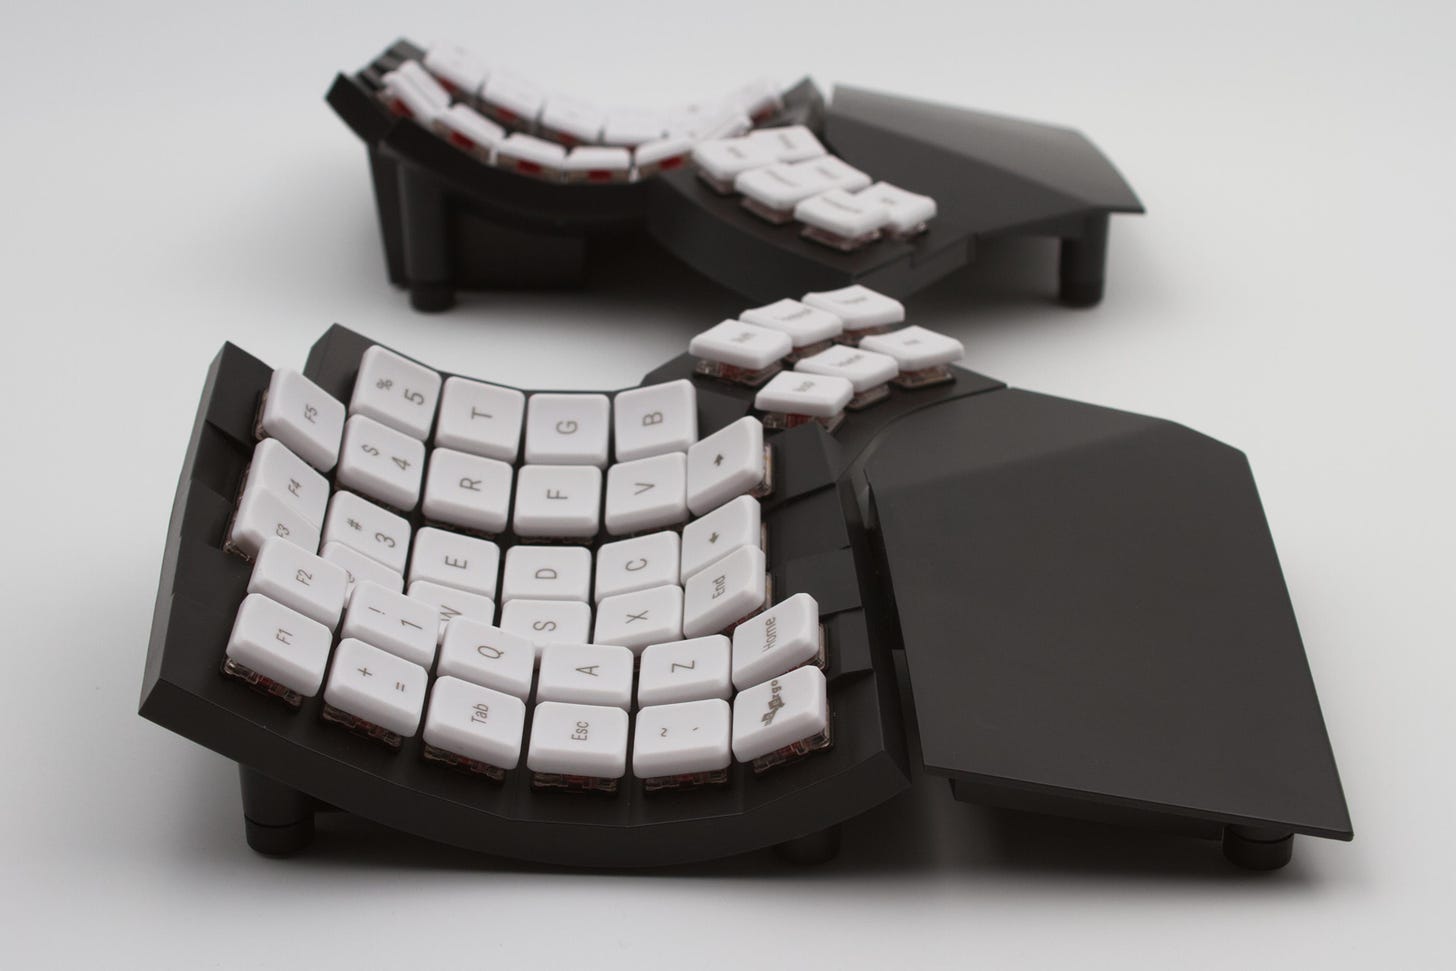 Glove-80 keyboard side profile view